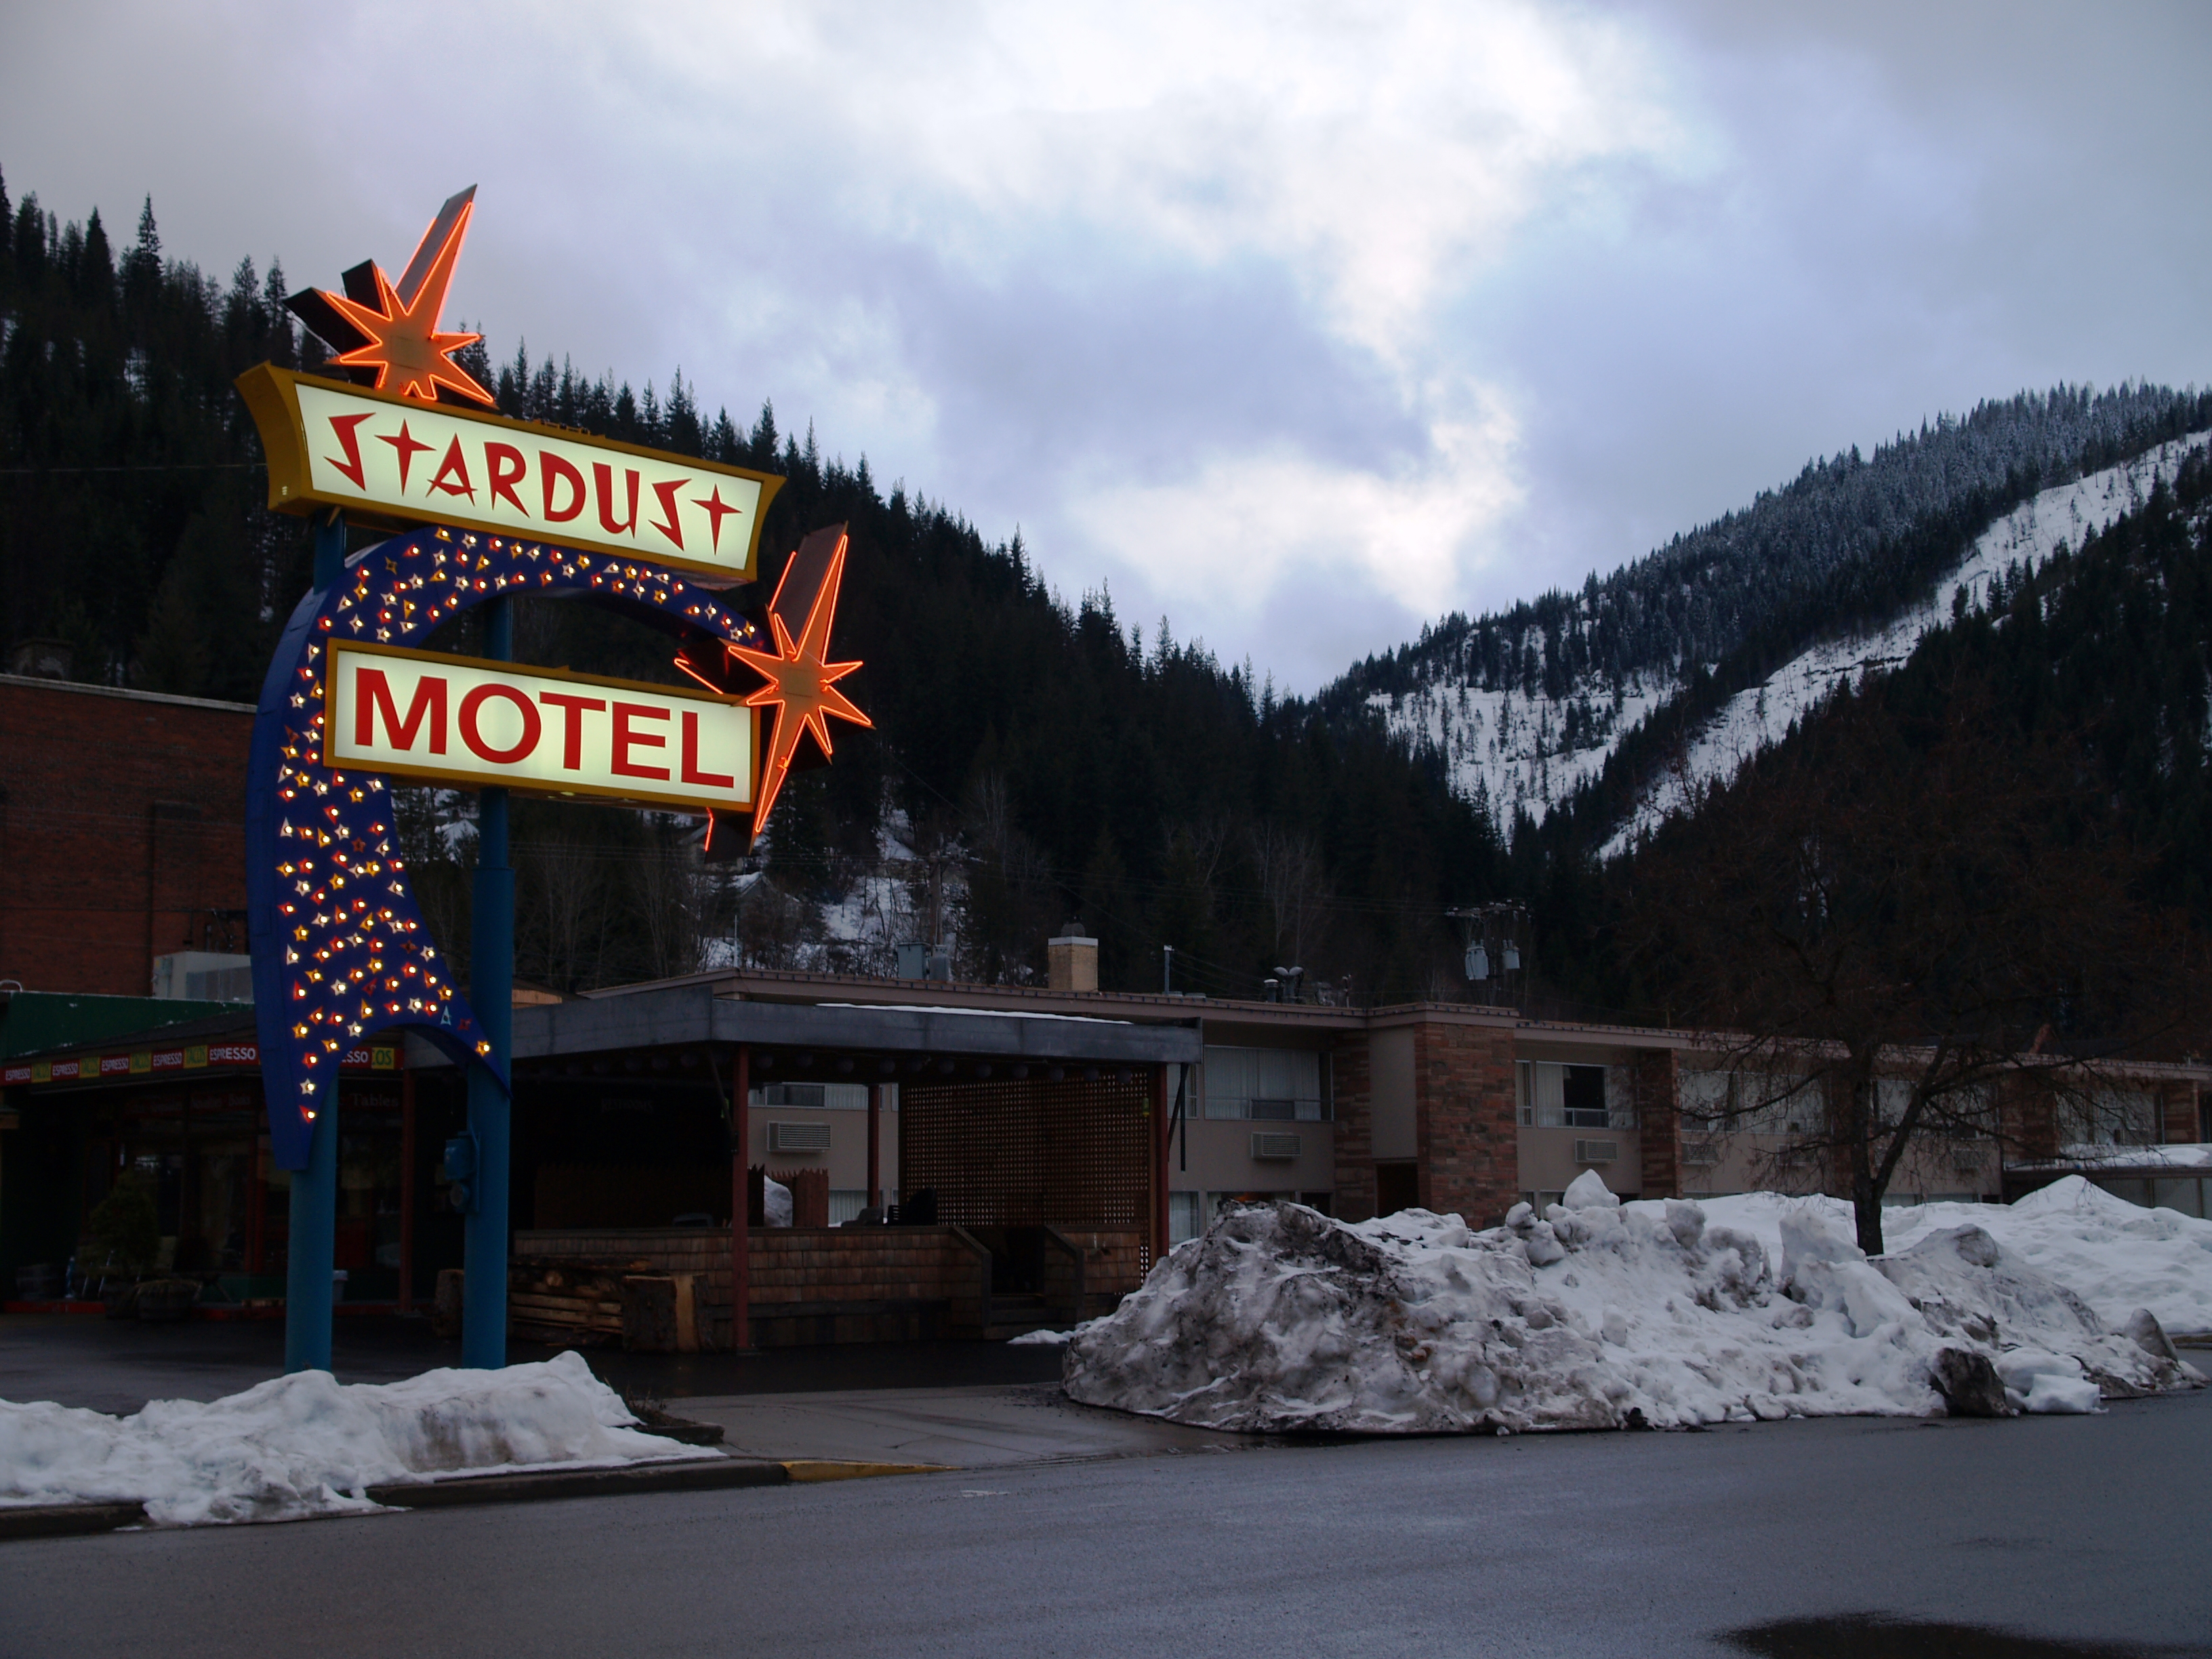 Stardust Motel - 410 Pine Street, Wallace, Idaho U.S.A. - March 17, 2008